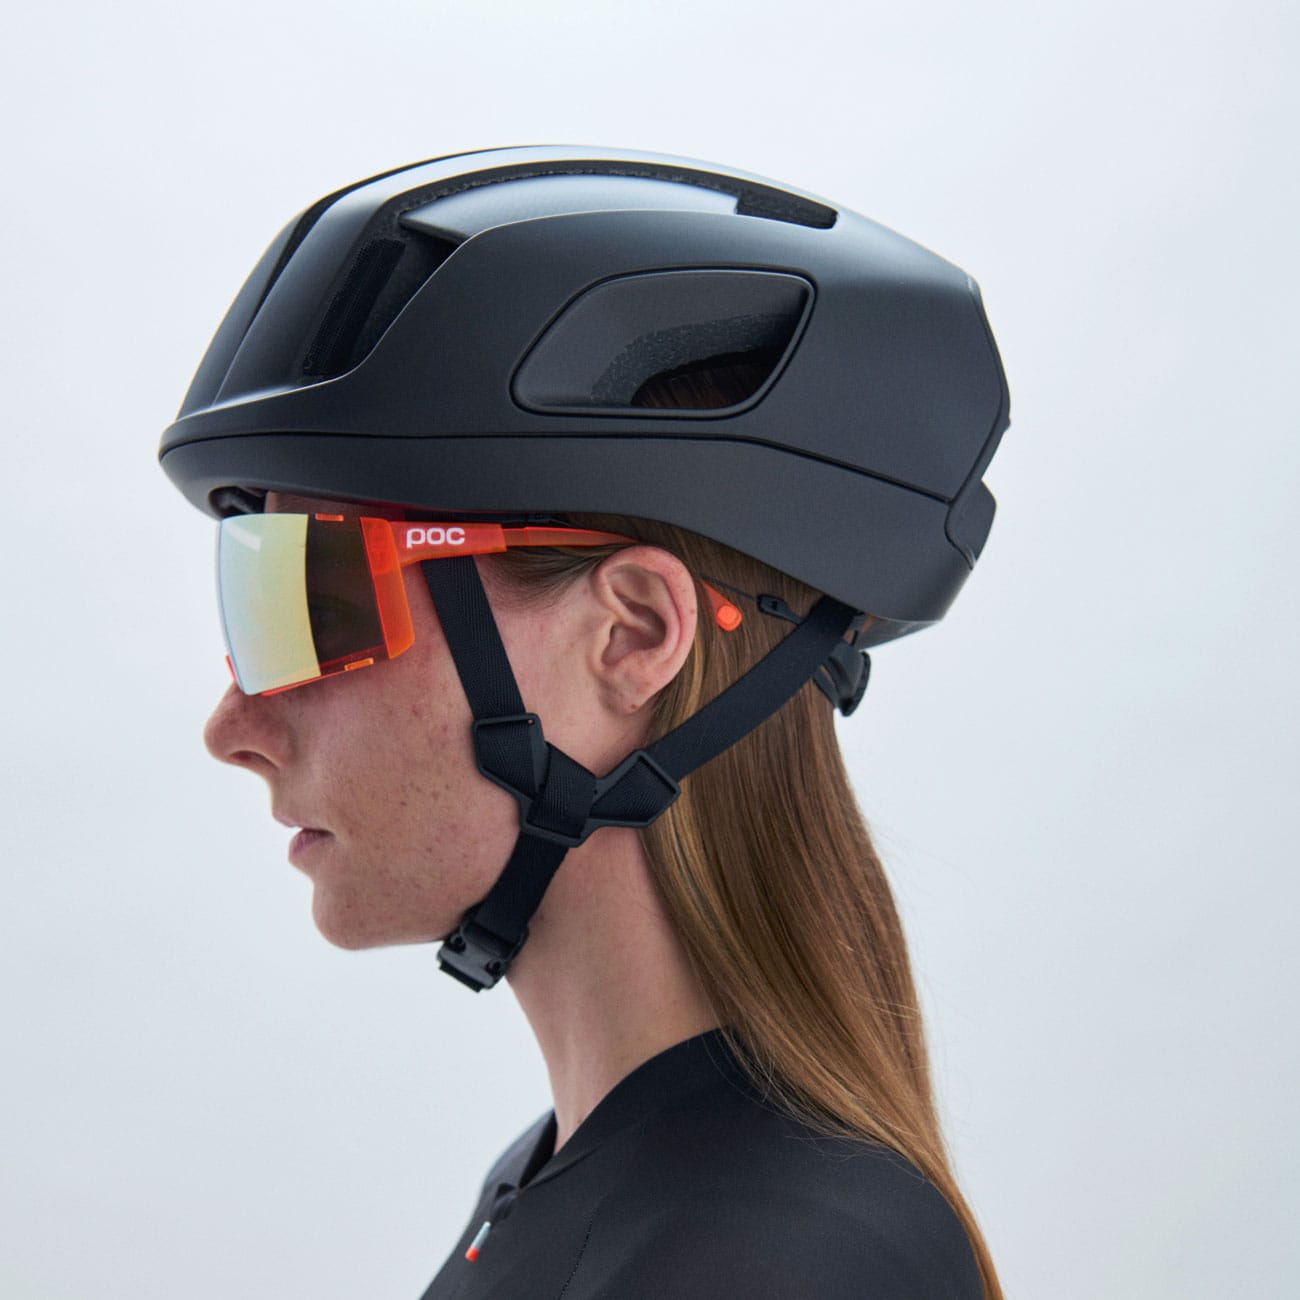 POC Cytal Carbon: Cutting-Edge Aero Road Helmet with Superior Ventilation